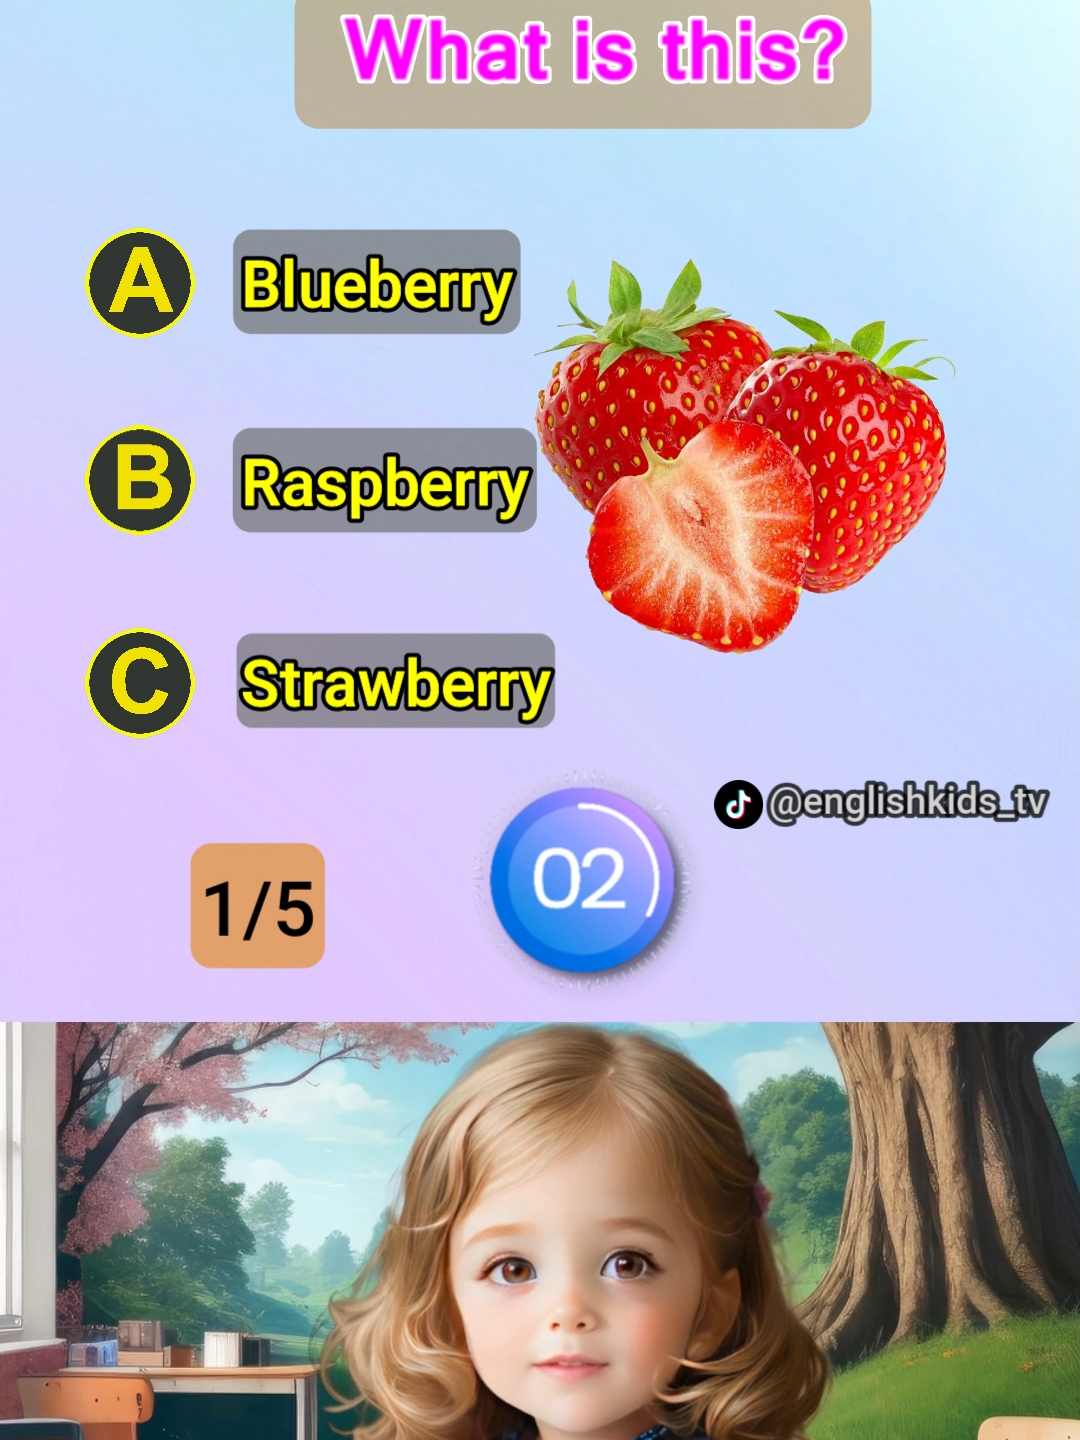 What is this? (Fruit Part4). #Trend #popular #kids #kidsoftiktok #learnEnglish #trendingtiktok #trendingvideo #viralvideo #viralvideos #foryour #foryou #vira #vira #vira #englishkids #love #funny #tiktok #fy #memes #questions #riddle #riddles #quiz #quiztime #trivia #answer #quizz #culture #knowledge